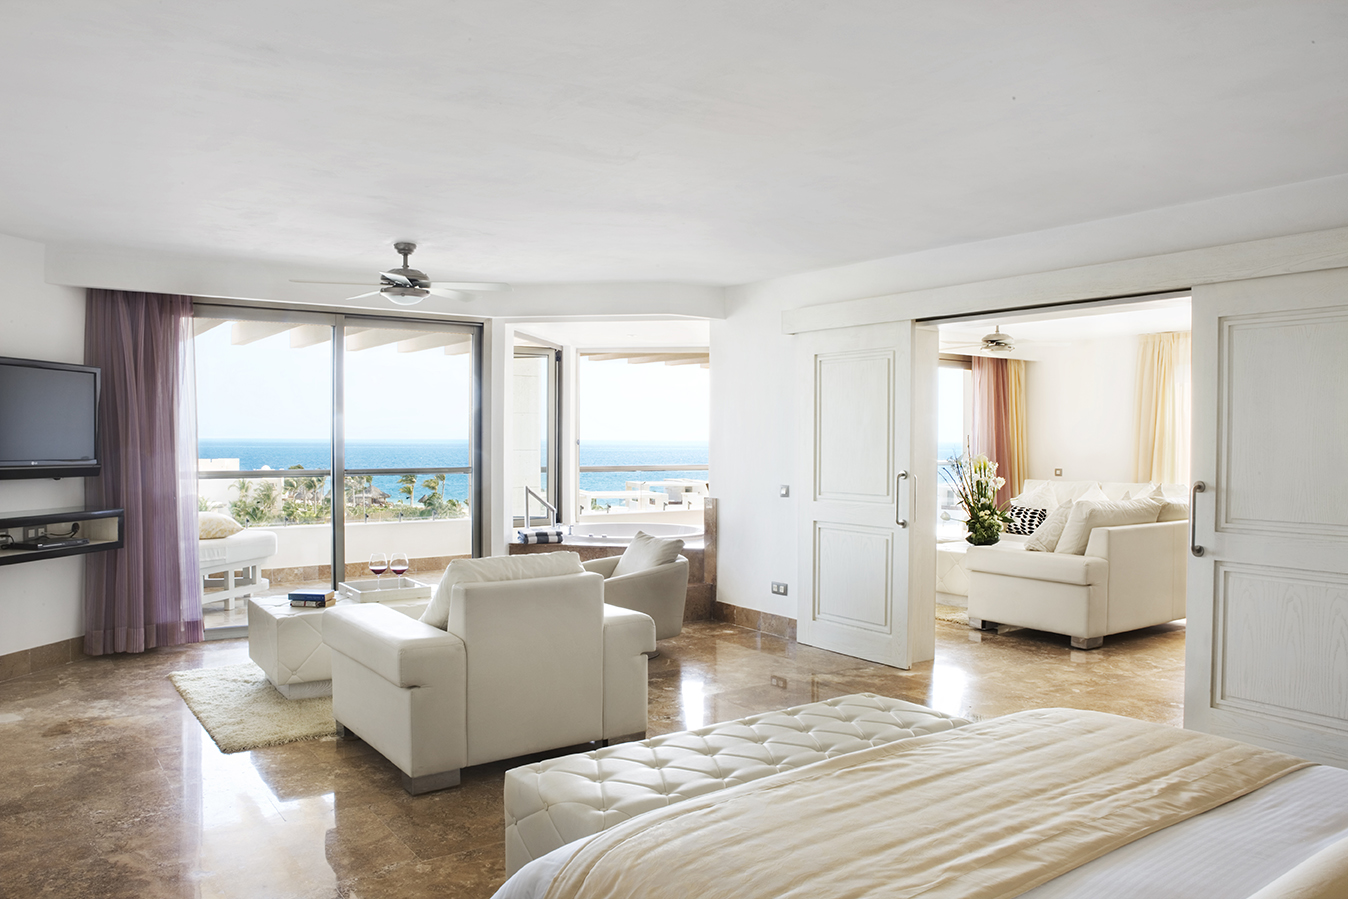 Penthouse suite in Beloved Playa Mujeres